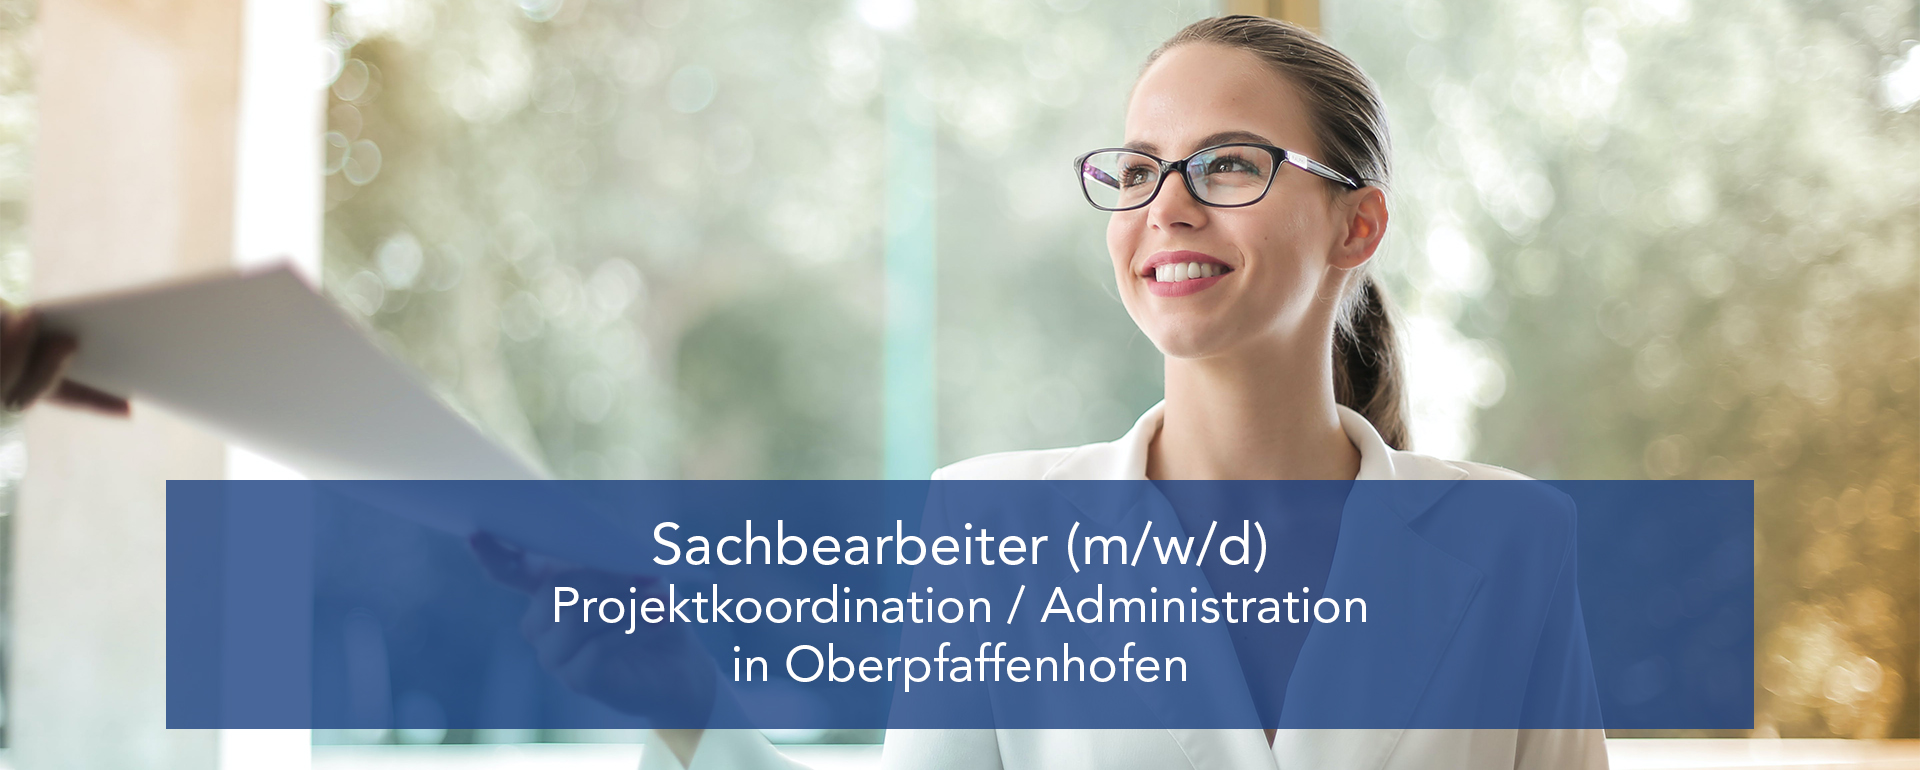 Sachbearbeiter (m/w/d) Projektkoordination / Administration